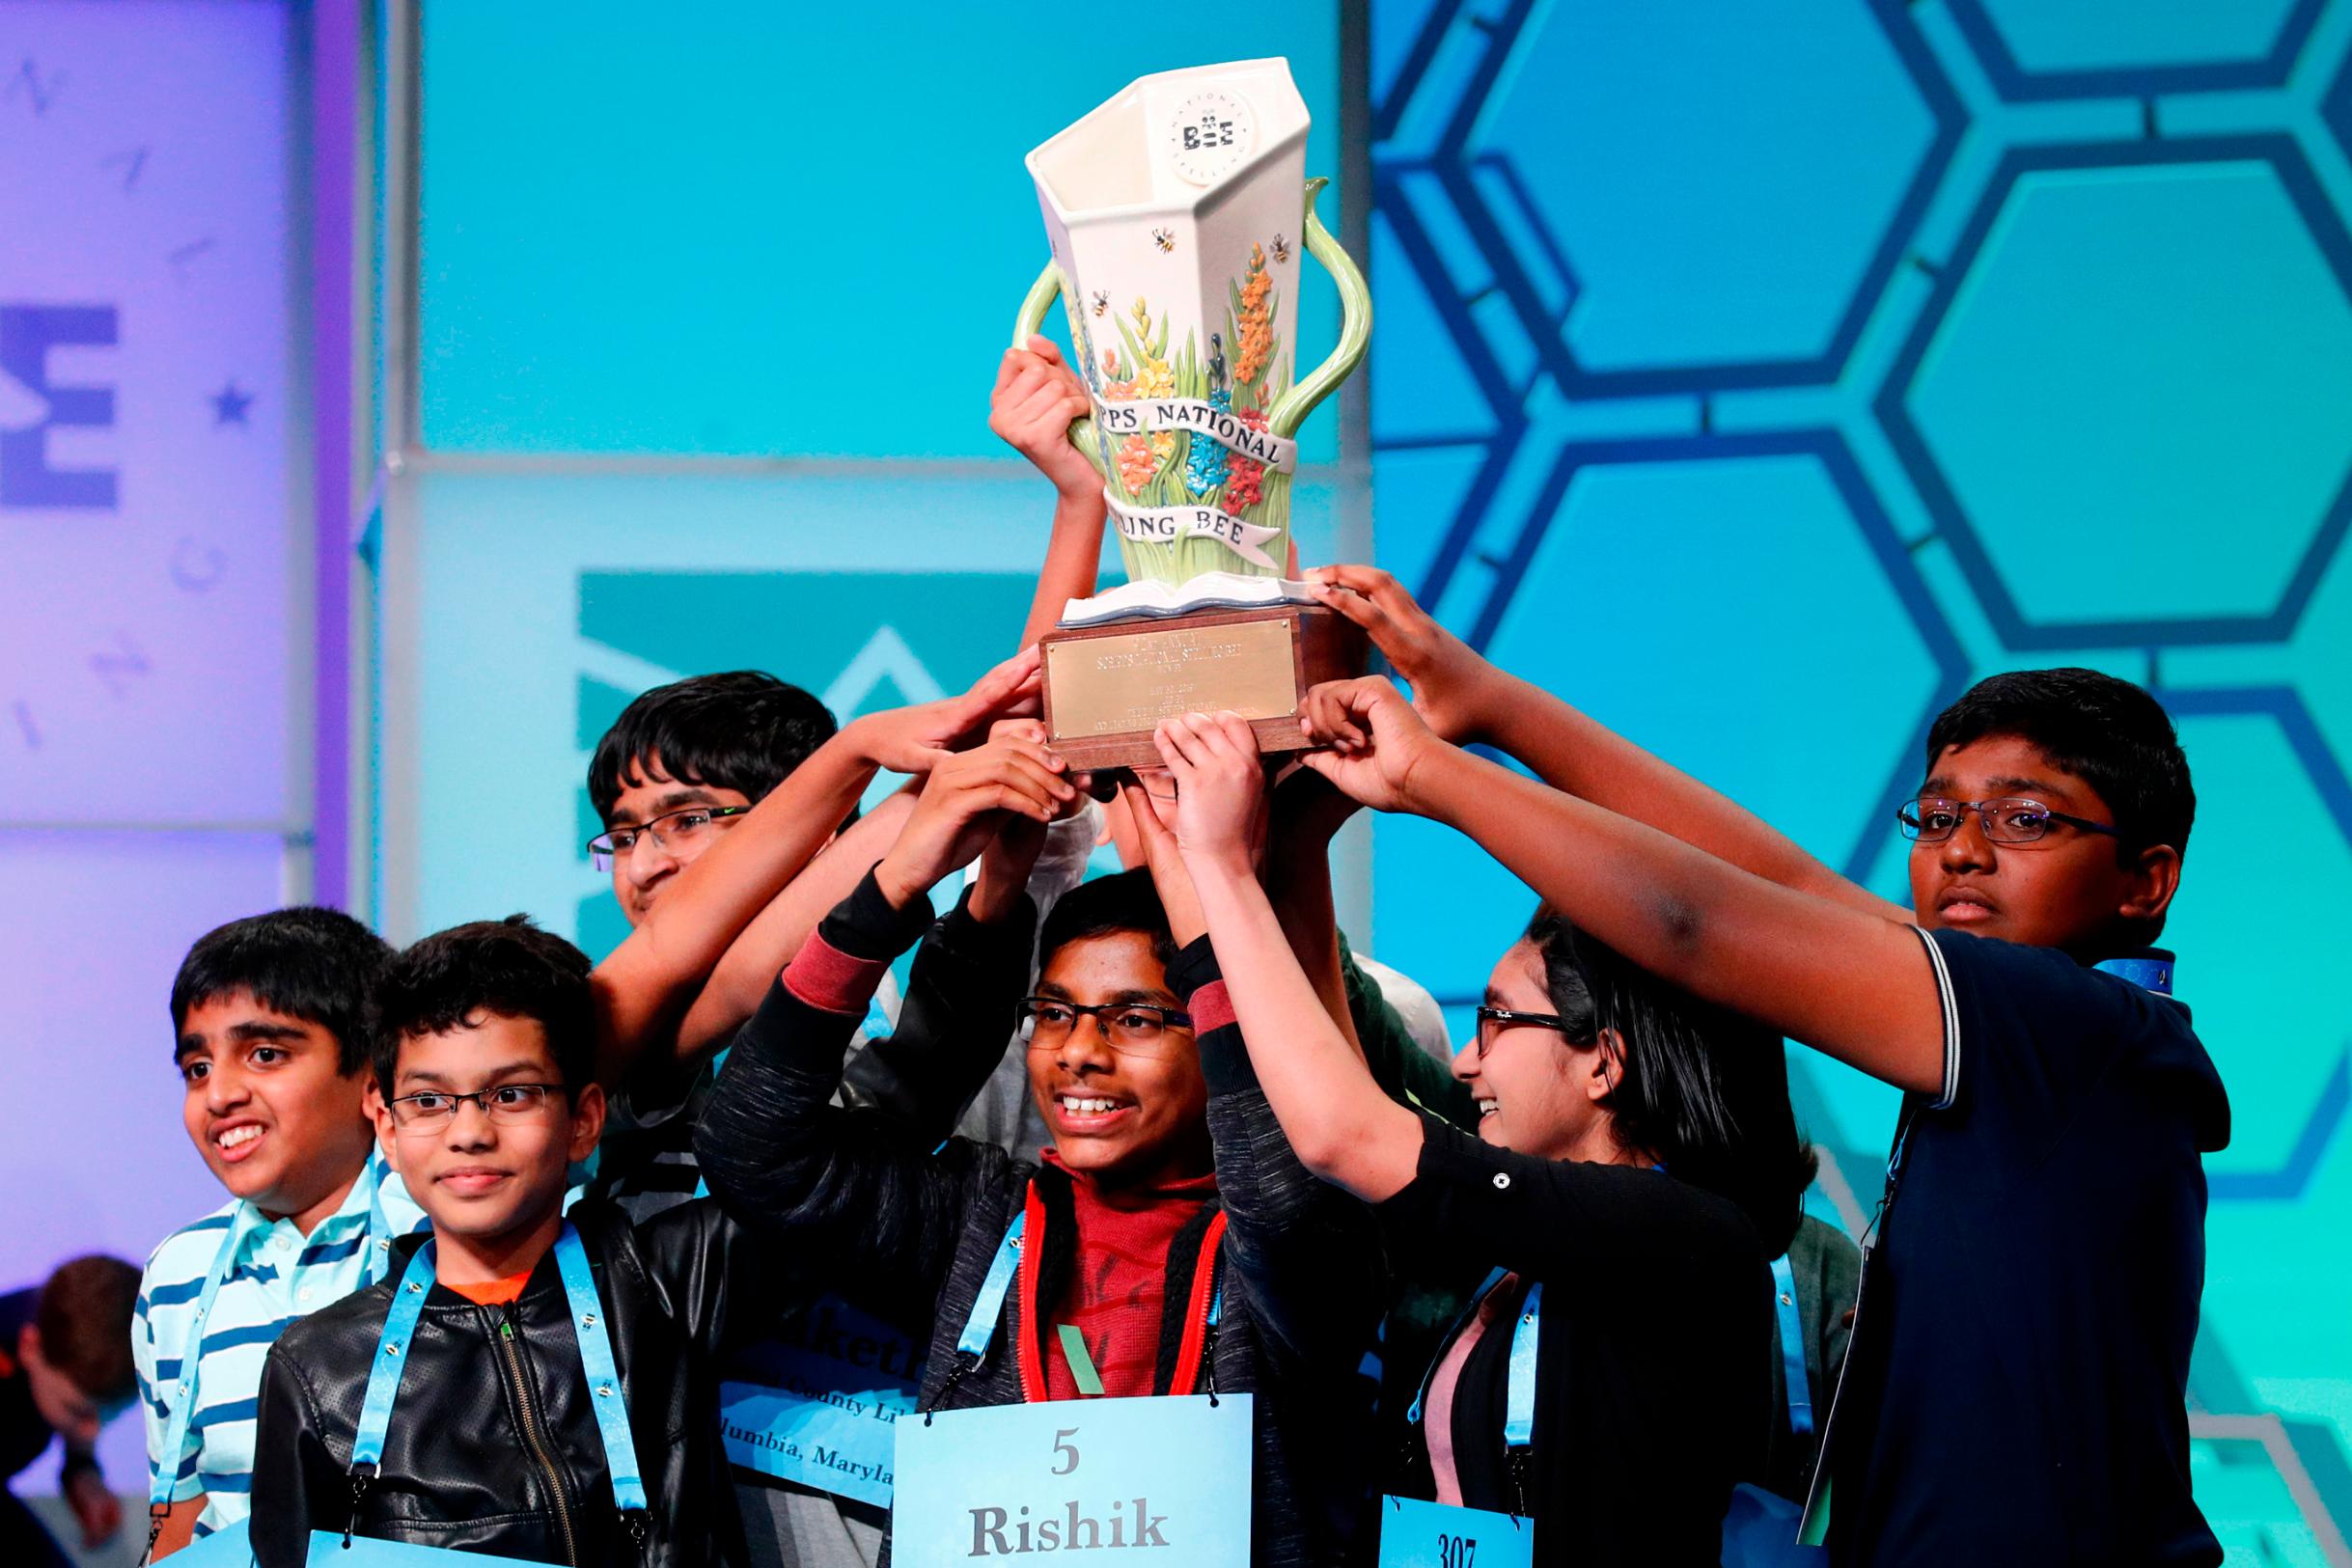 Spelling Bee has 8 champions | CNN